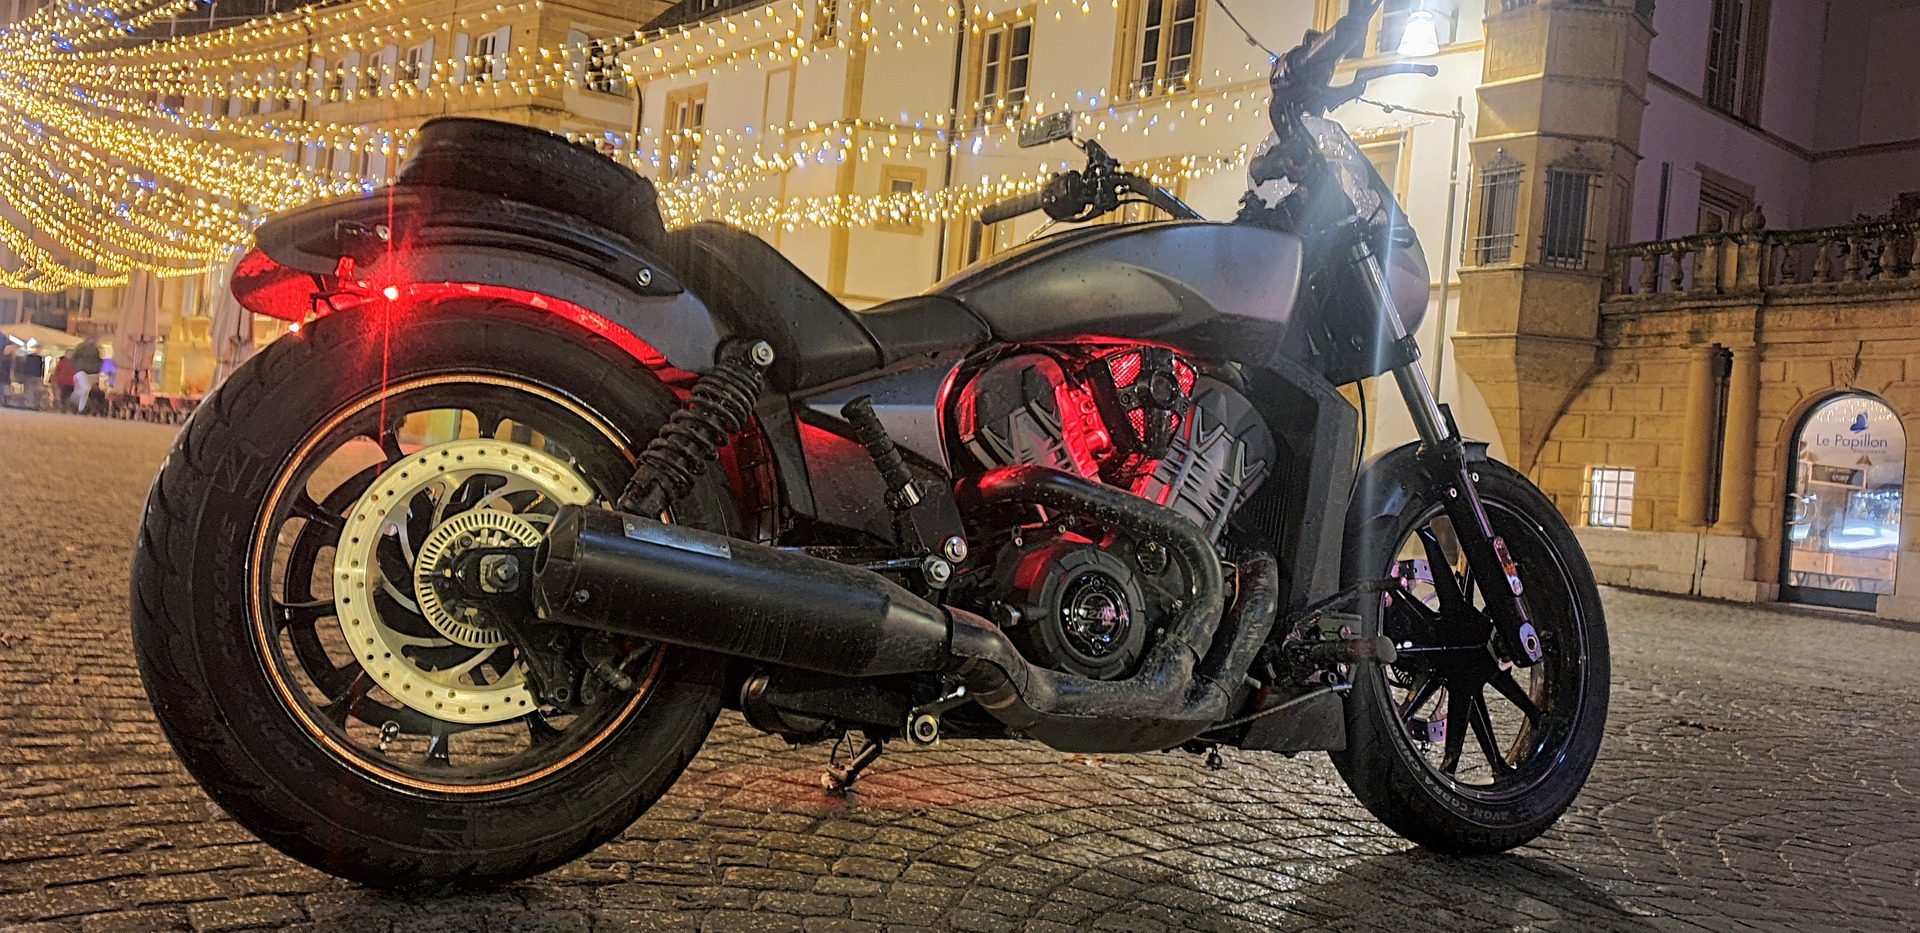 10 badass motorcycles